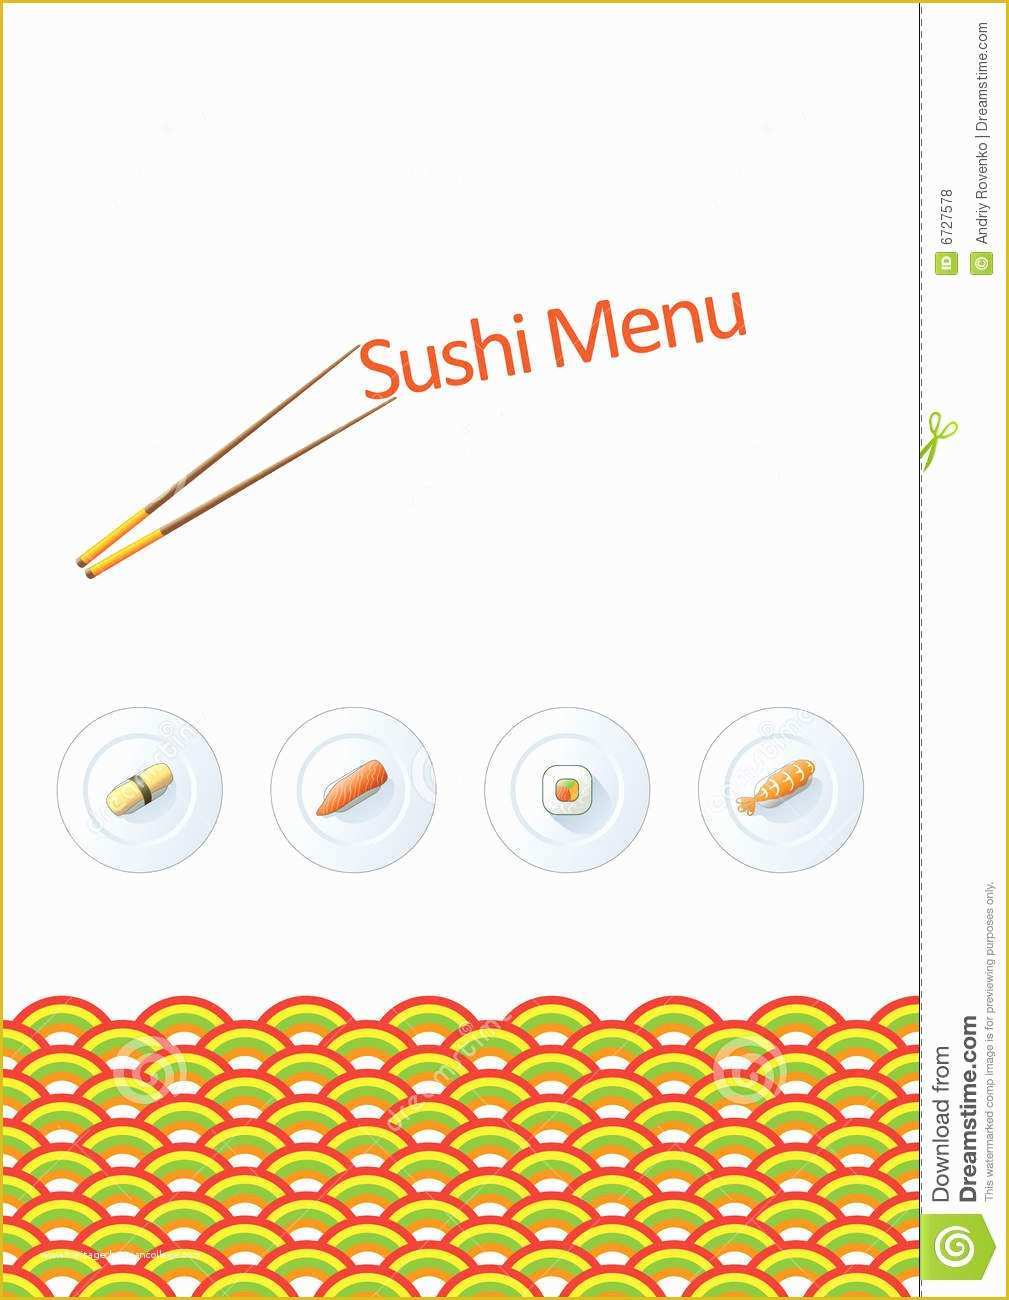 Sushi Menu Template Free Download Of Sushi Menu Template Royalty Free Stock S Image